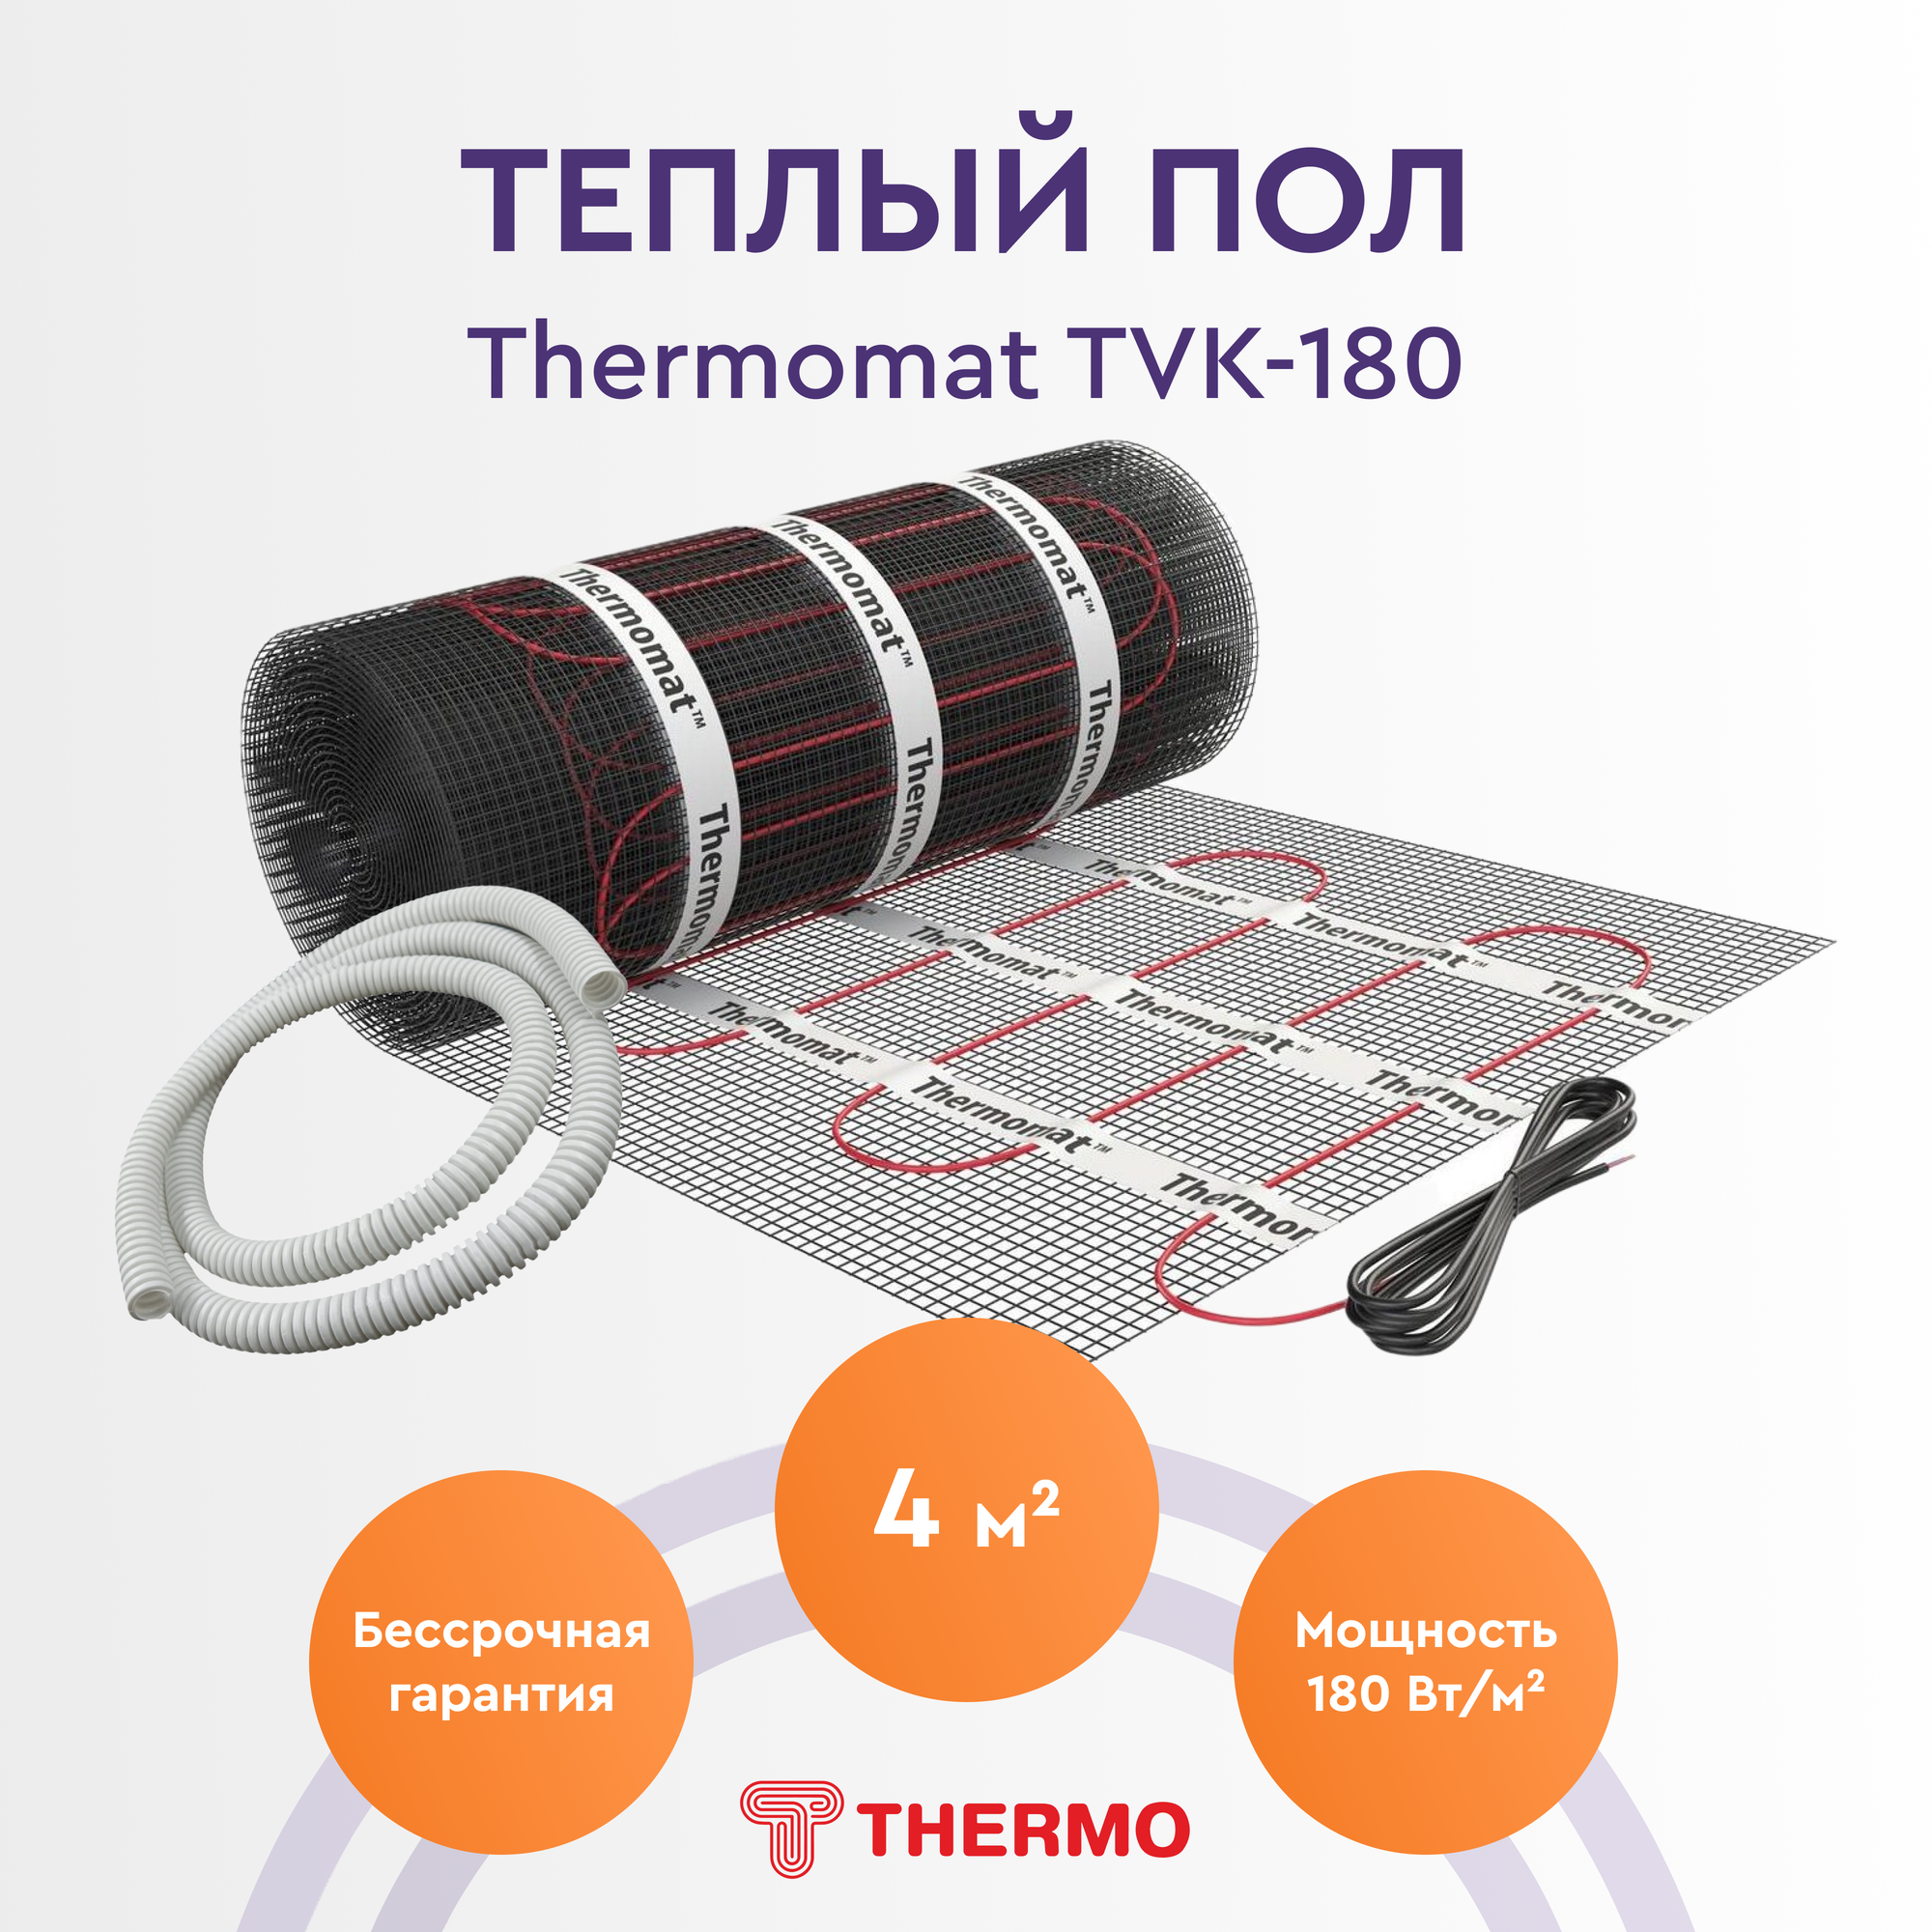 Теплый пол Thermo Thermomat TVK-180 4м. кв.